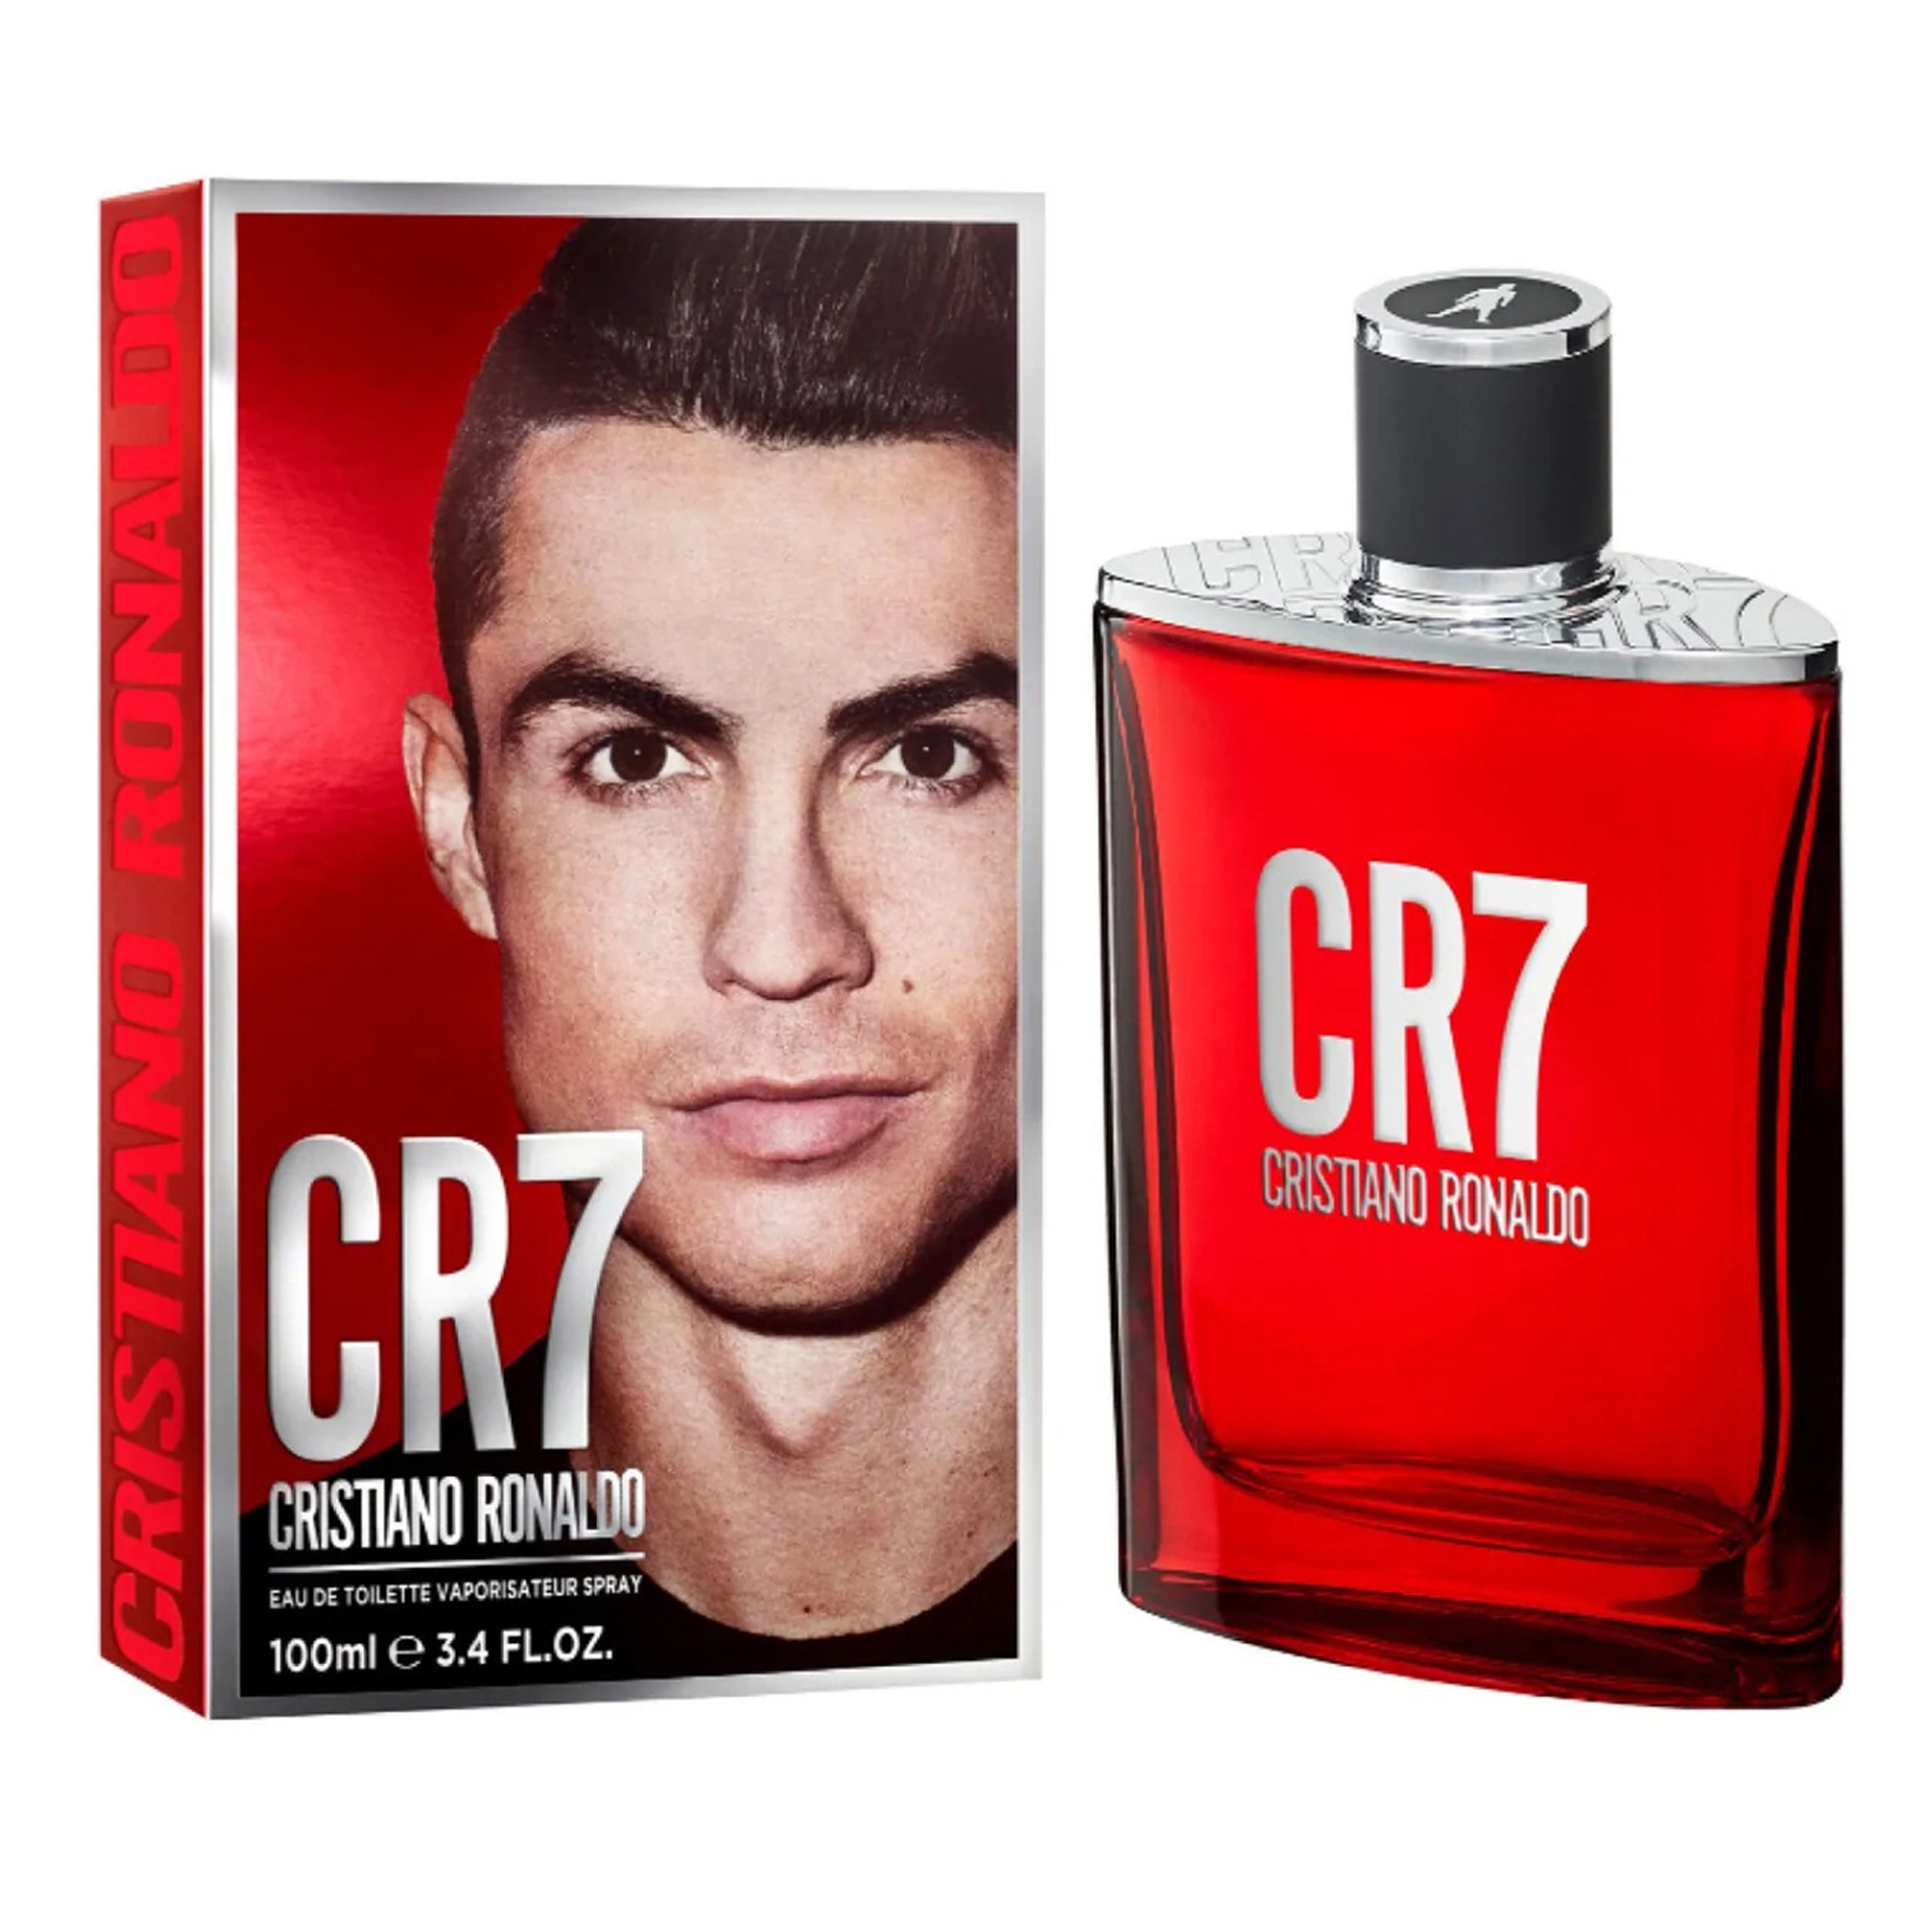 CR7 by Cristiano Ronaldo, EDT Spray for Men, 3.4 oz - image 3 of 6